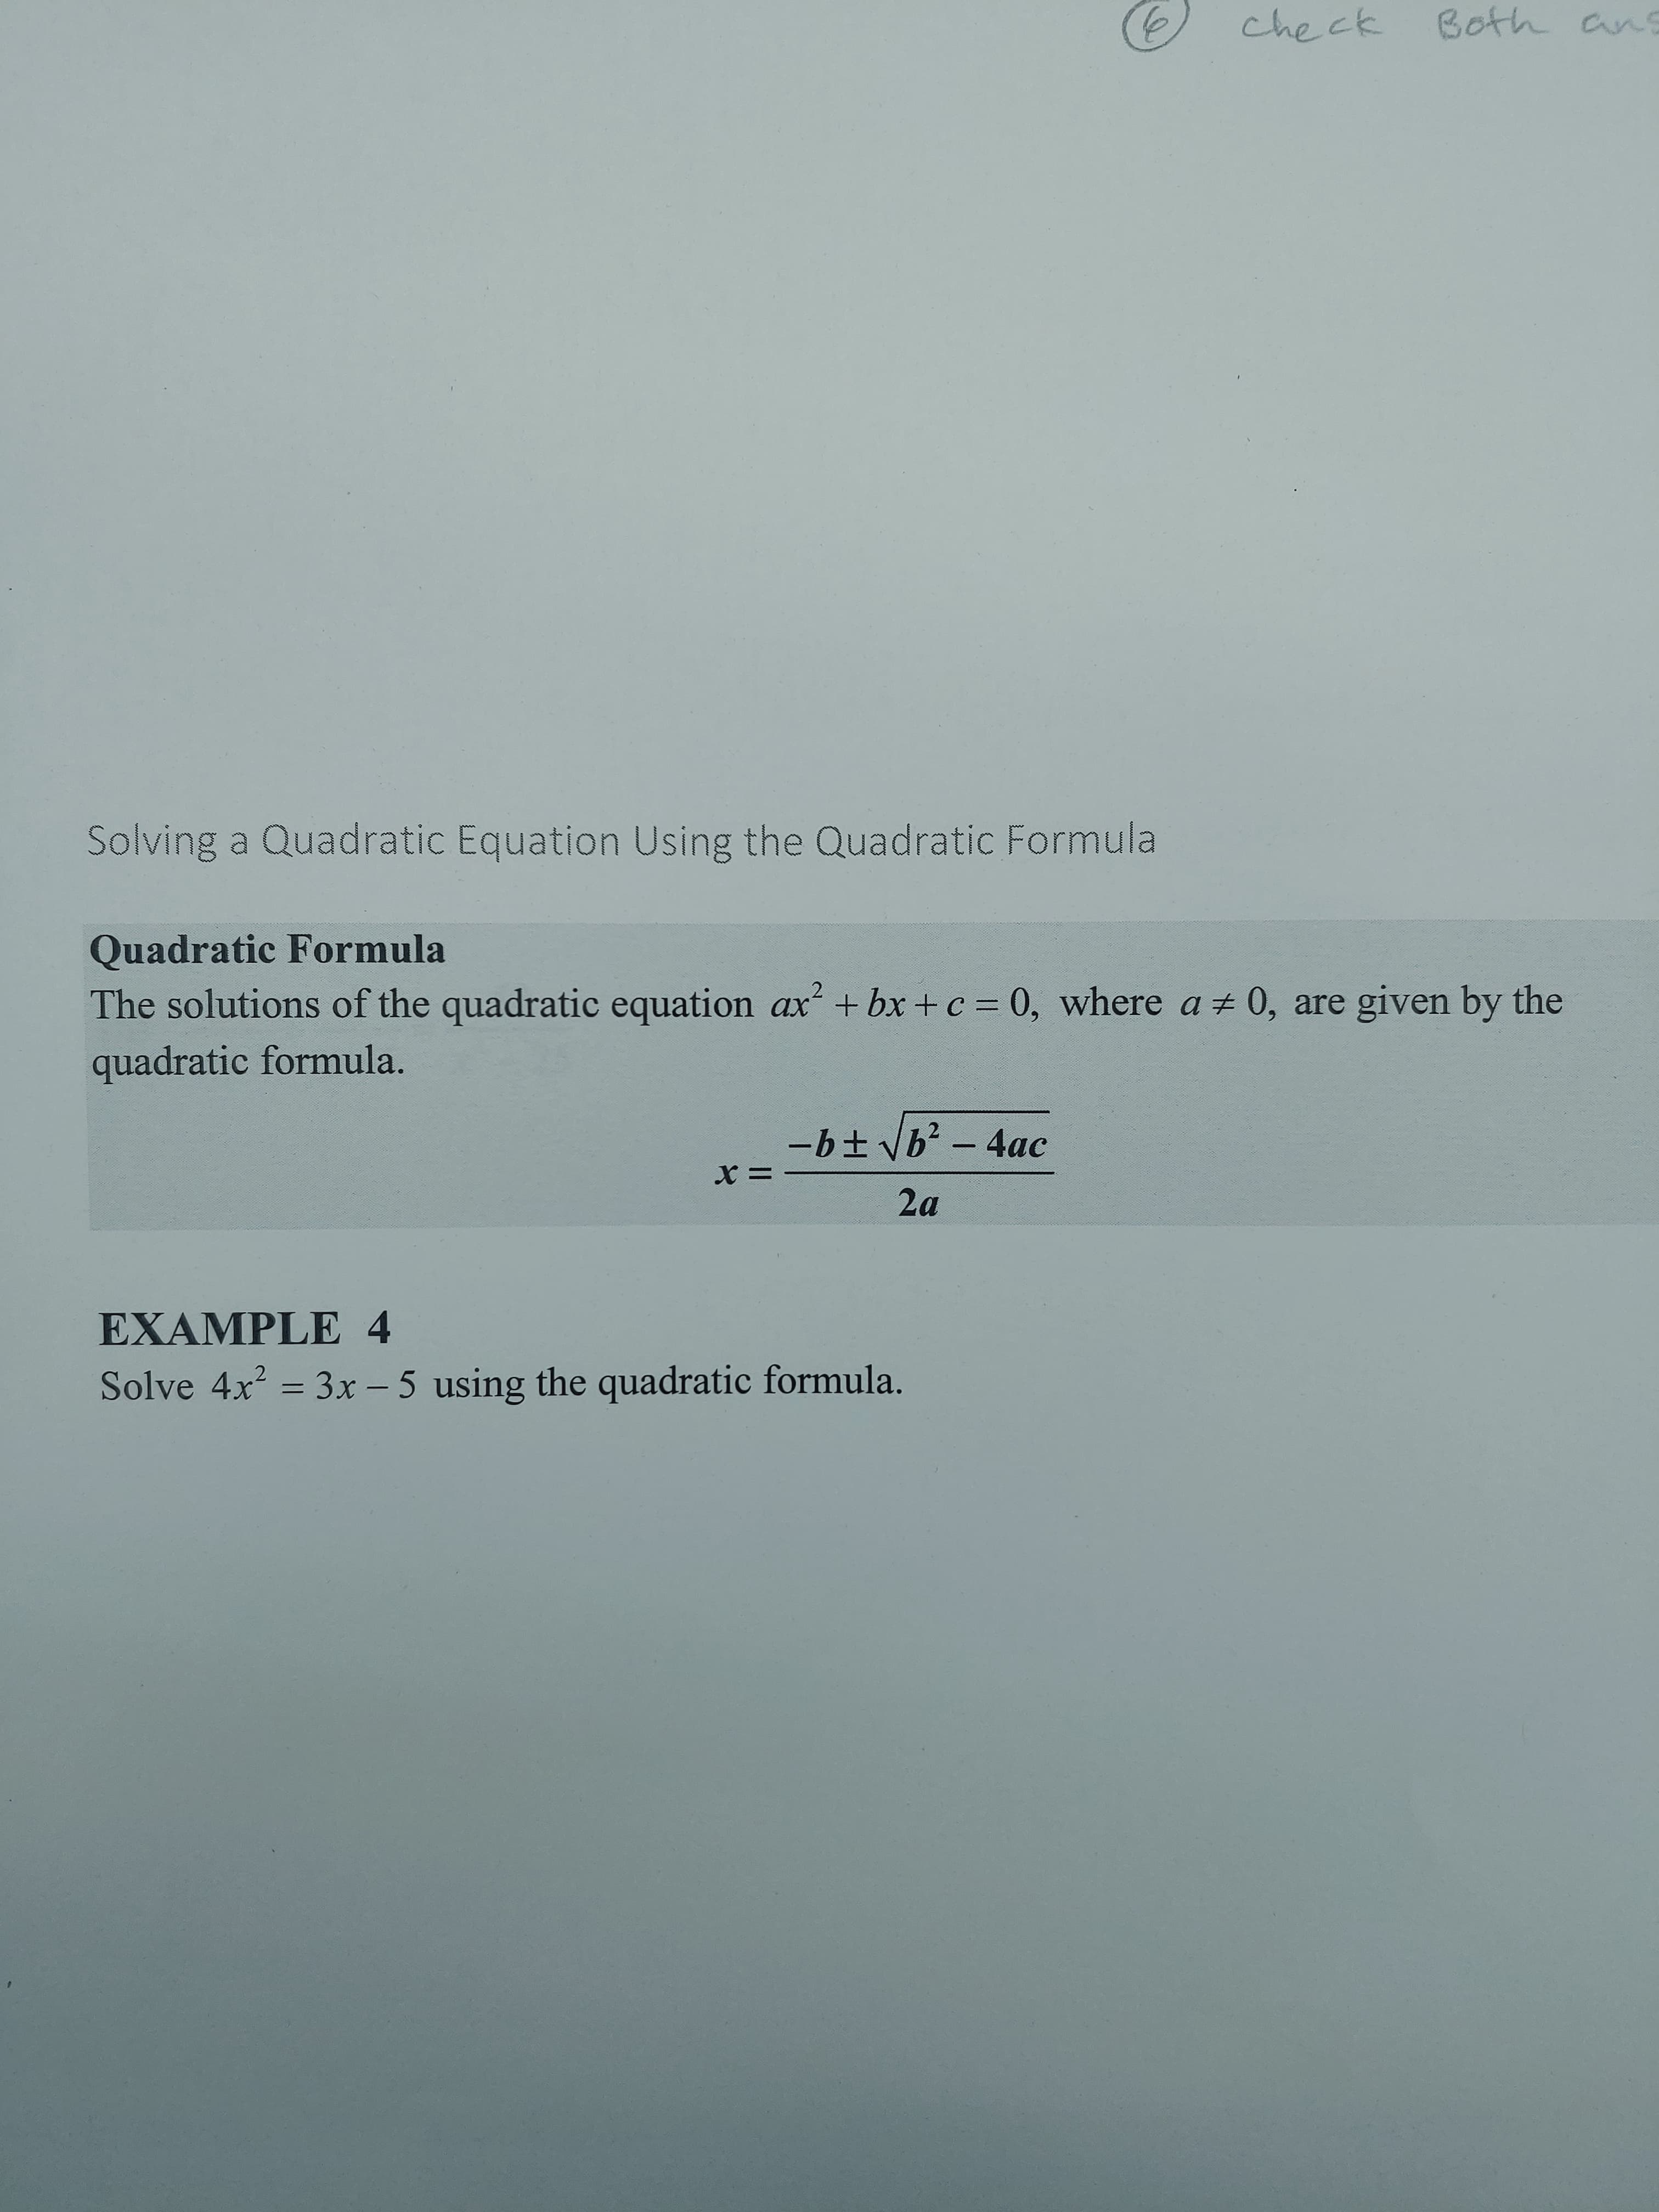 check
Both anS
Solving a Quadratic Equation Using the Quadratic Formula
Quadratic Formula
The solutions of the quadratic equation ax + bx +c = 0, where a + 0, are given by the
ах
quadratic formula.
-b± yb - 4ac
2a
EXAMPLE 4
Solve 4x = 3x - 5 using the quadratic formula.
